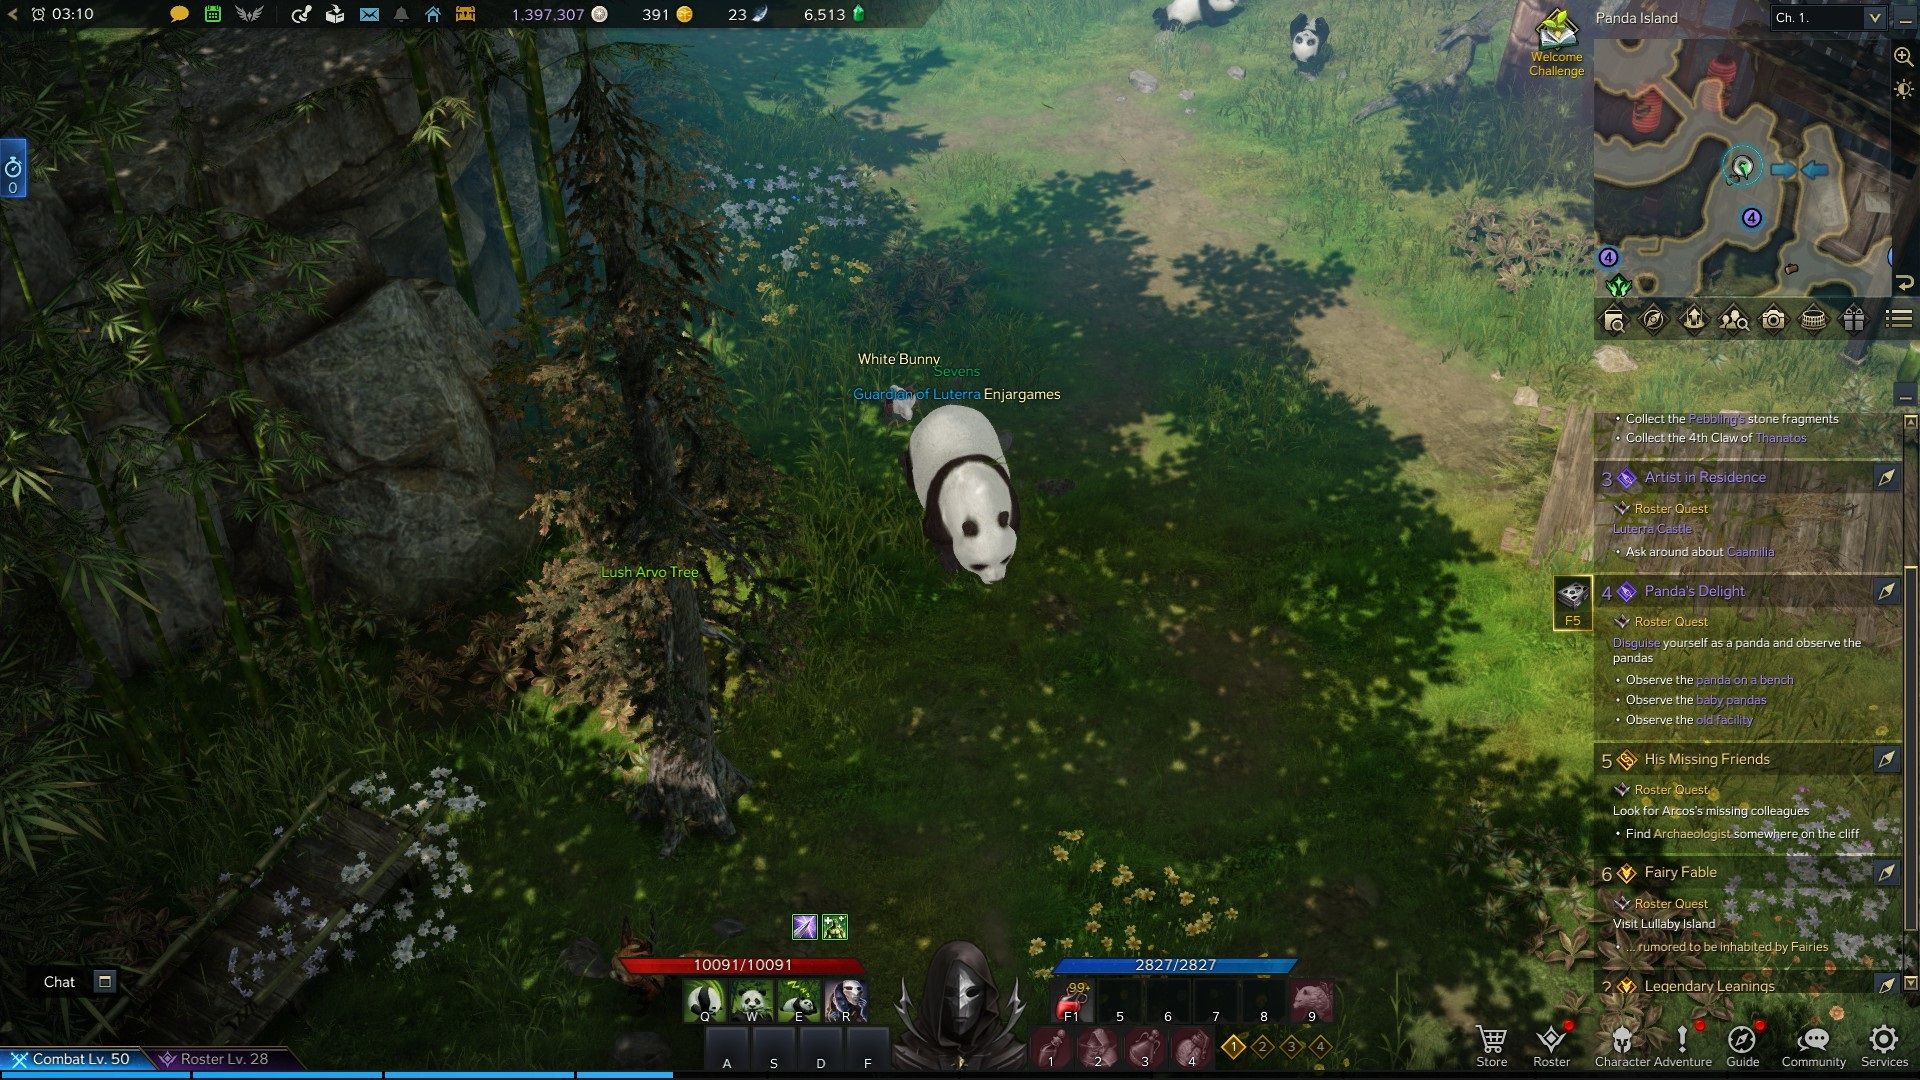 Panda Island Lost Ark.jpg